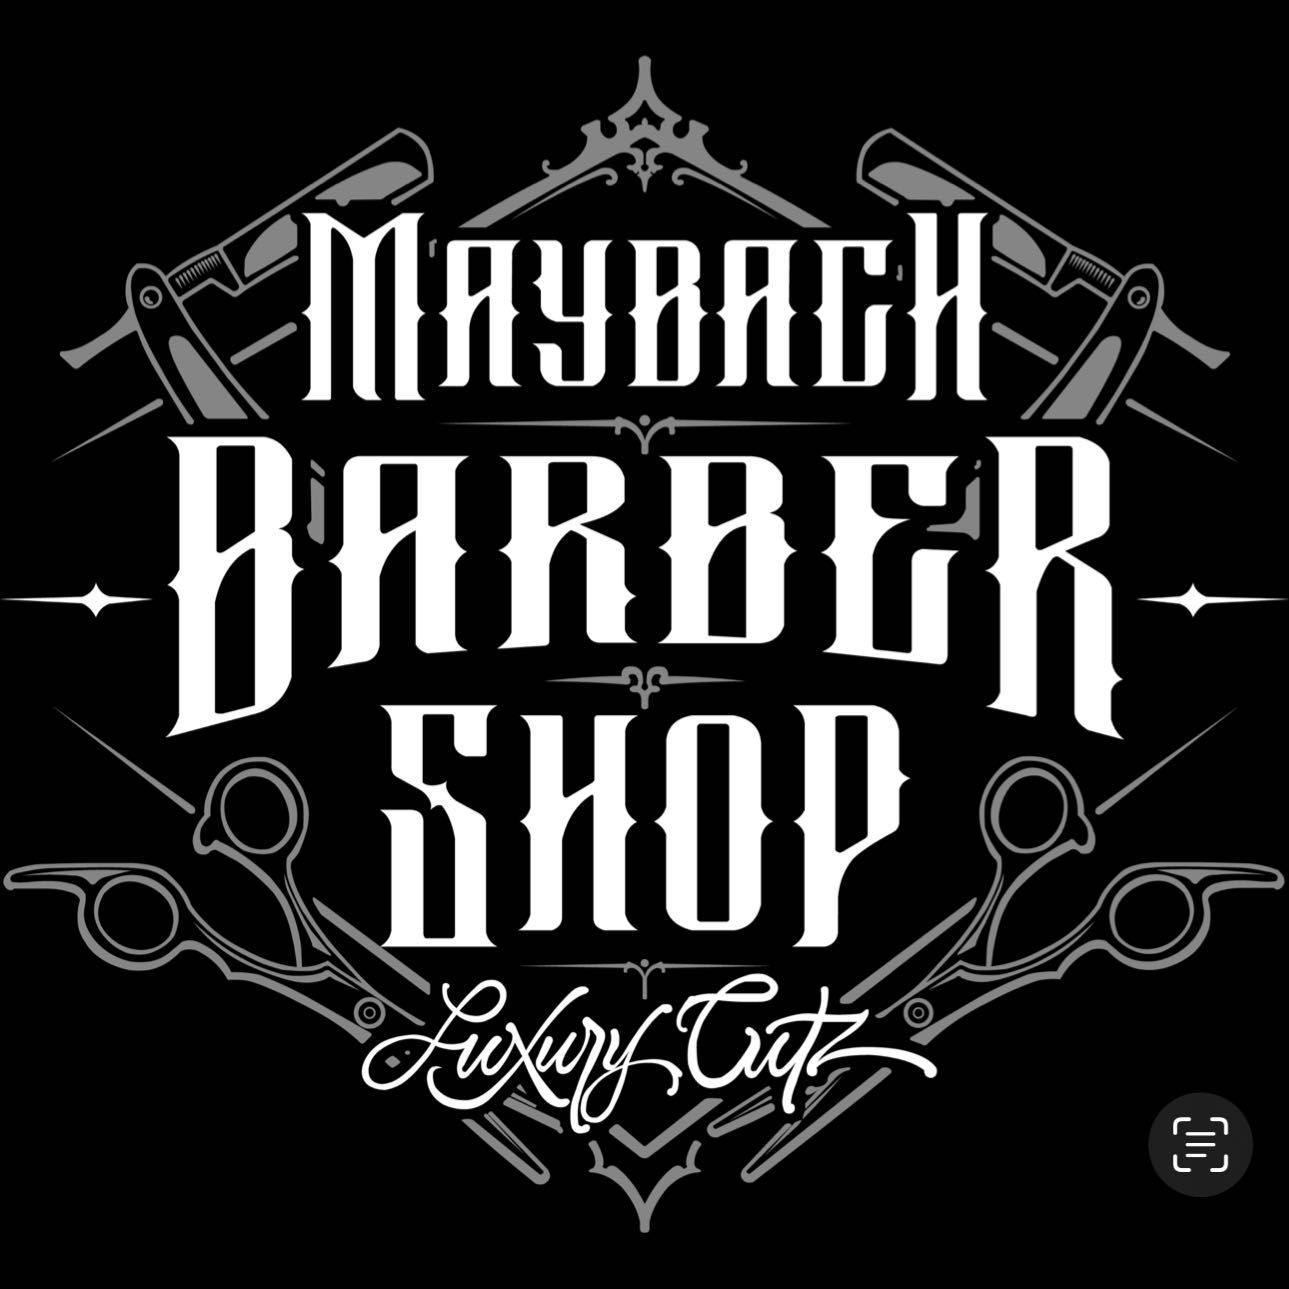 Maybach Barbershop luxury cutz, 10692 Wiles Rd, Coral Springs, 33076